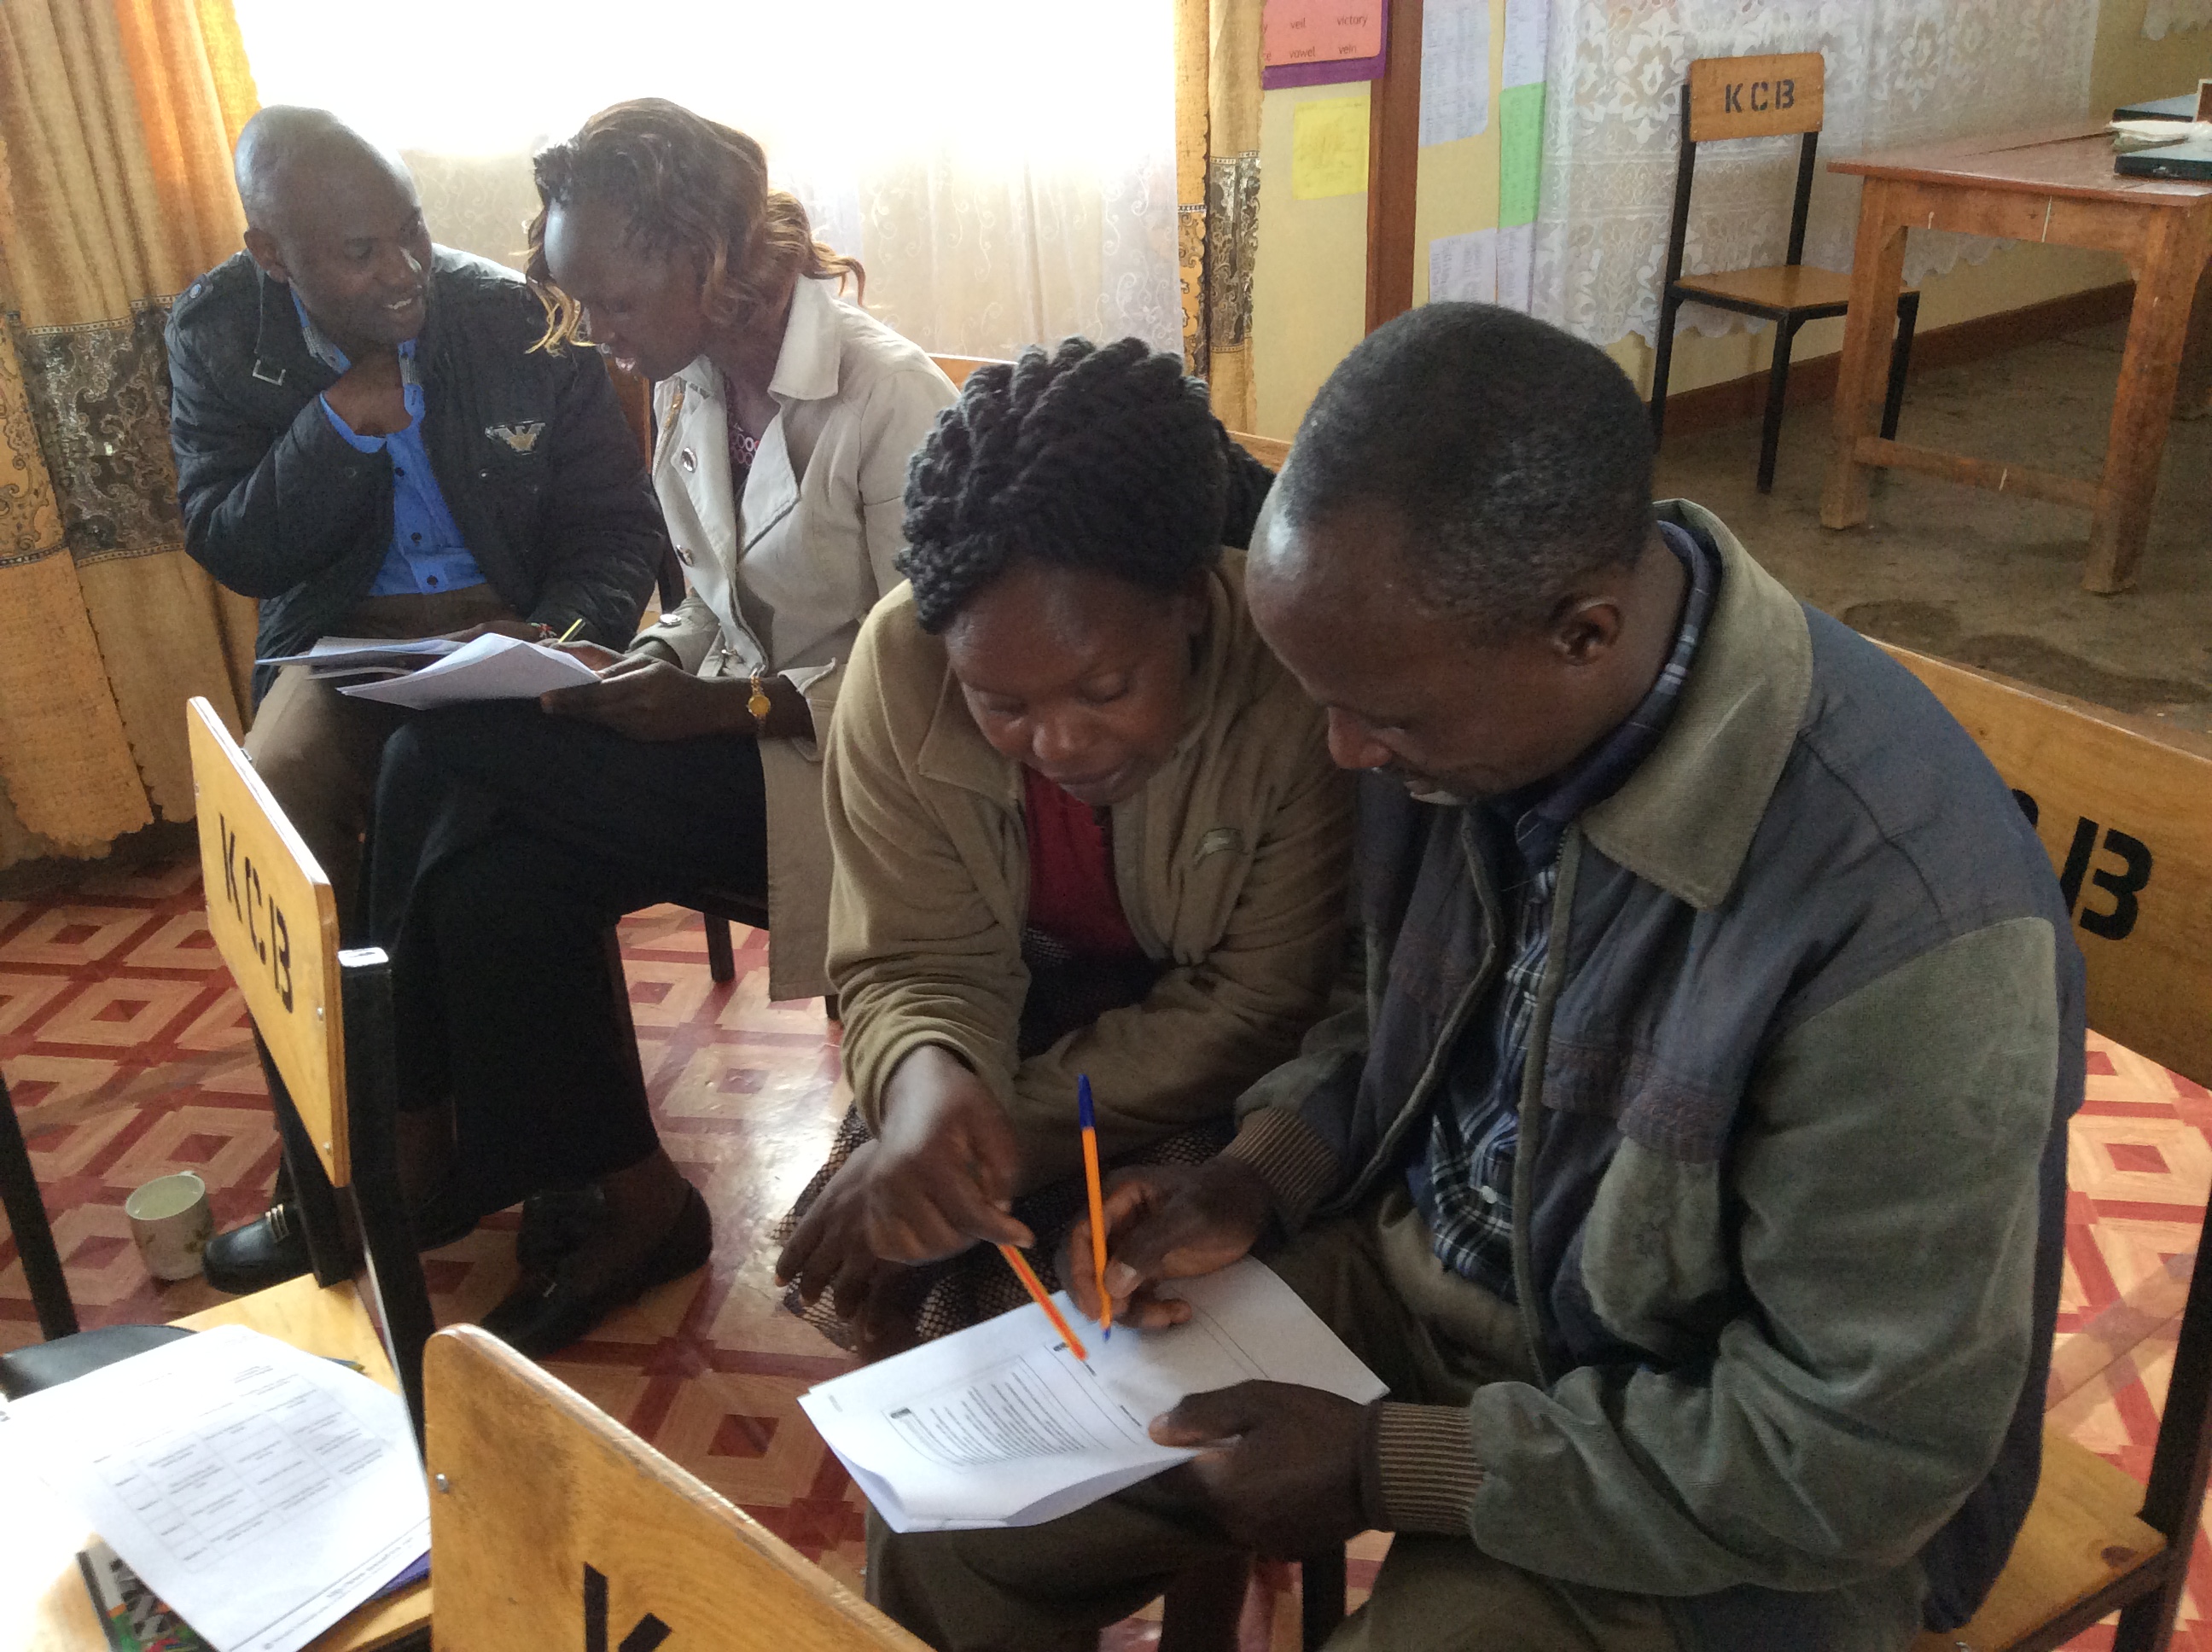 Teachers in Kenya working together during school-based teacher development